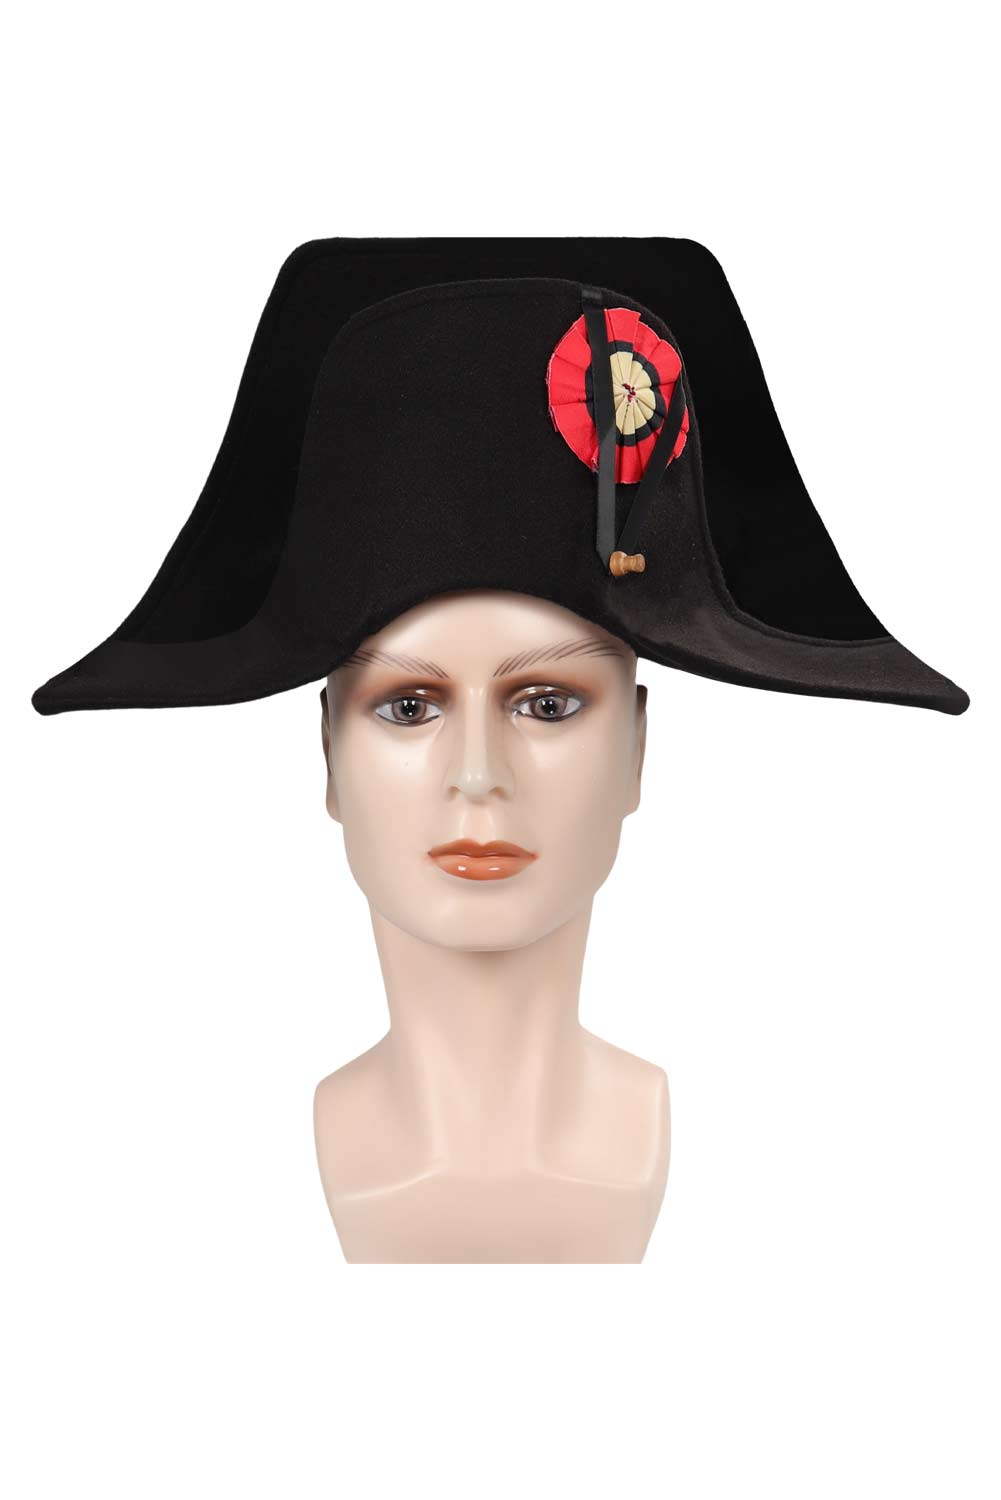 2023 Movie Napoleon France Captain Cosplay Hat Cap Halloween Costume Accessories Props